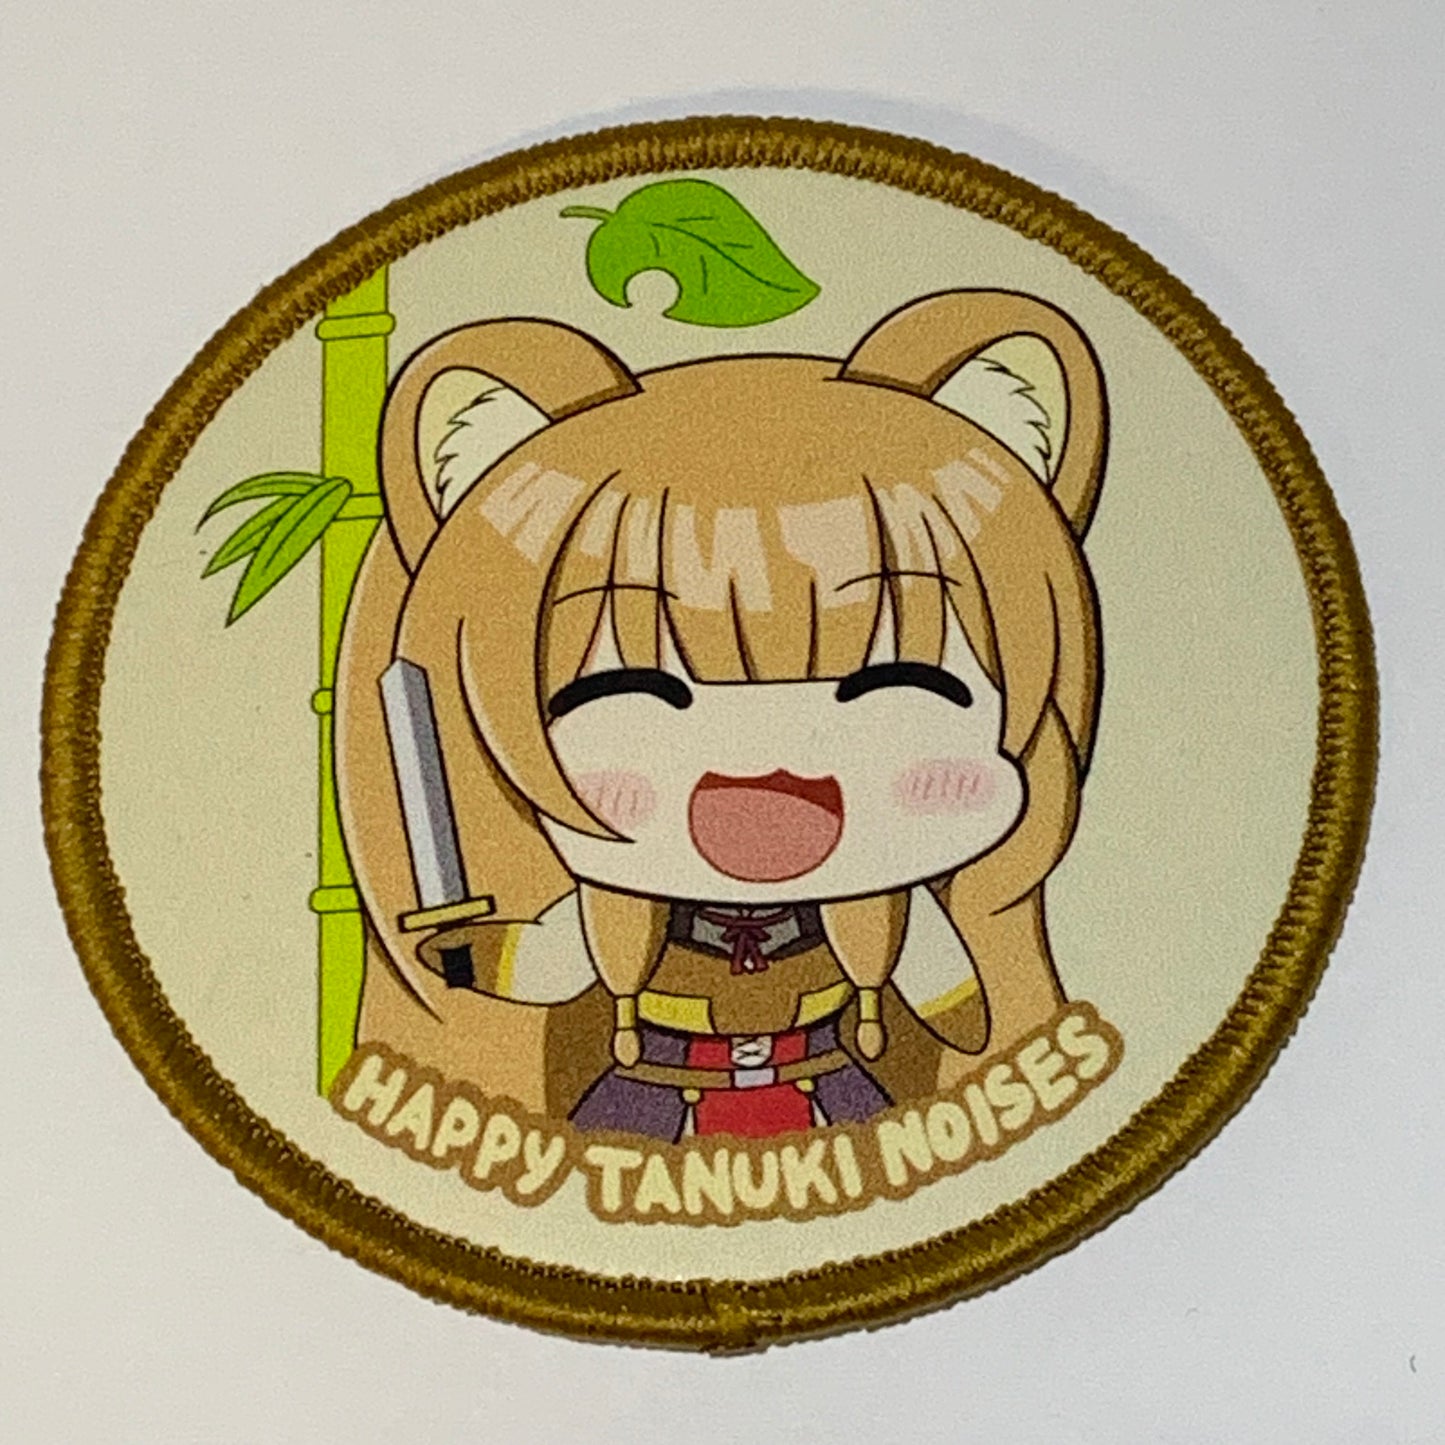 Raphtalia "Happy Tanuki Noises" Rising of Shield Hero Patch or Sticker